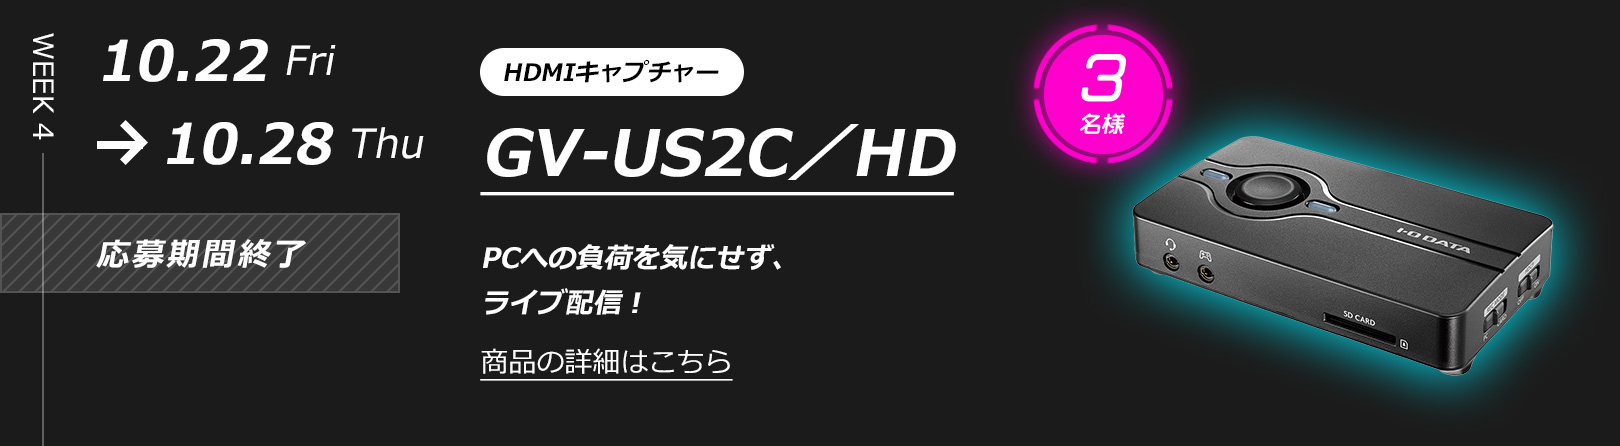 WEEK 4: HDMIキャプチャー GV-US2C/HD